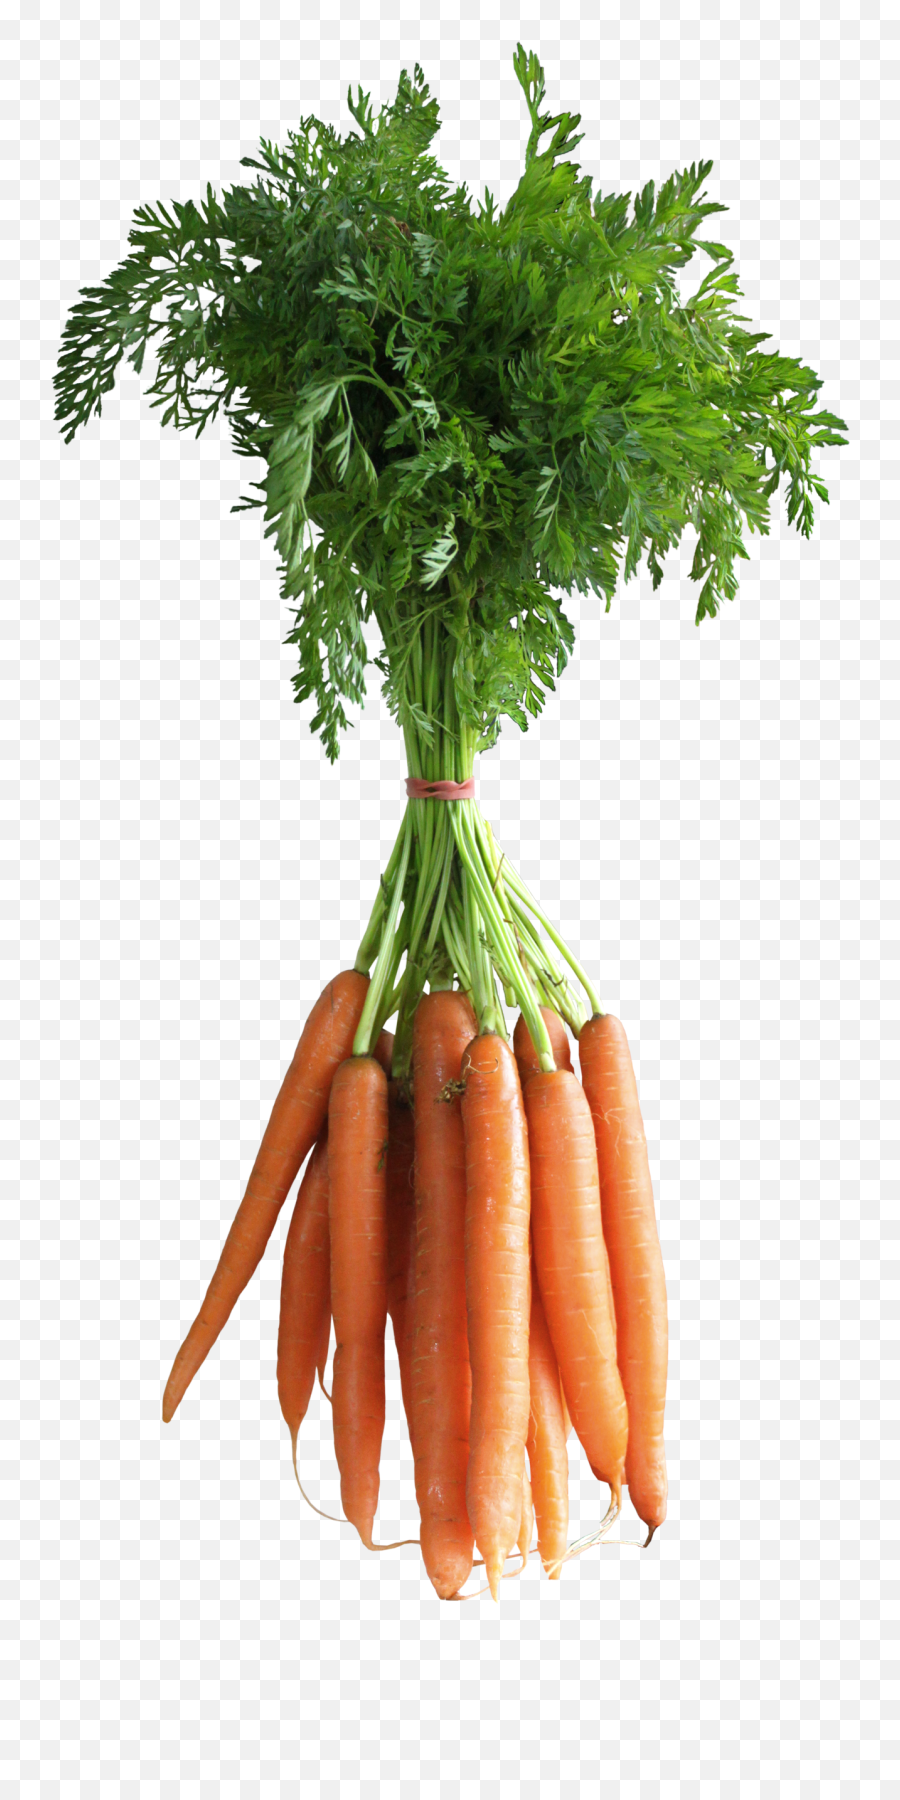 Download Carrots Png Clipart Picture Fruits And Vegetables - Carrot Leaves Png Transparent,Vegetables Transparent Background